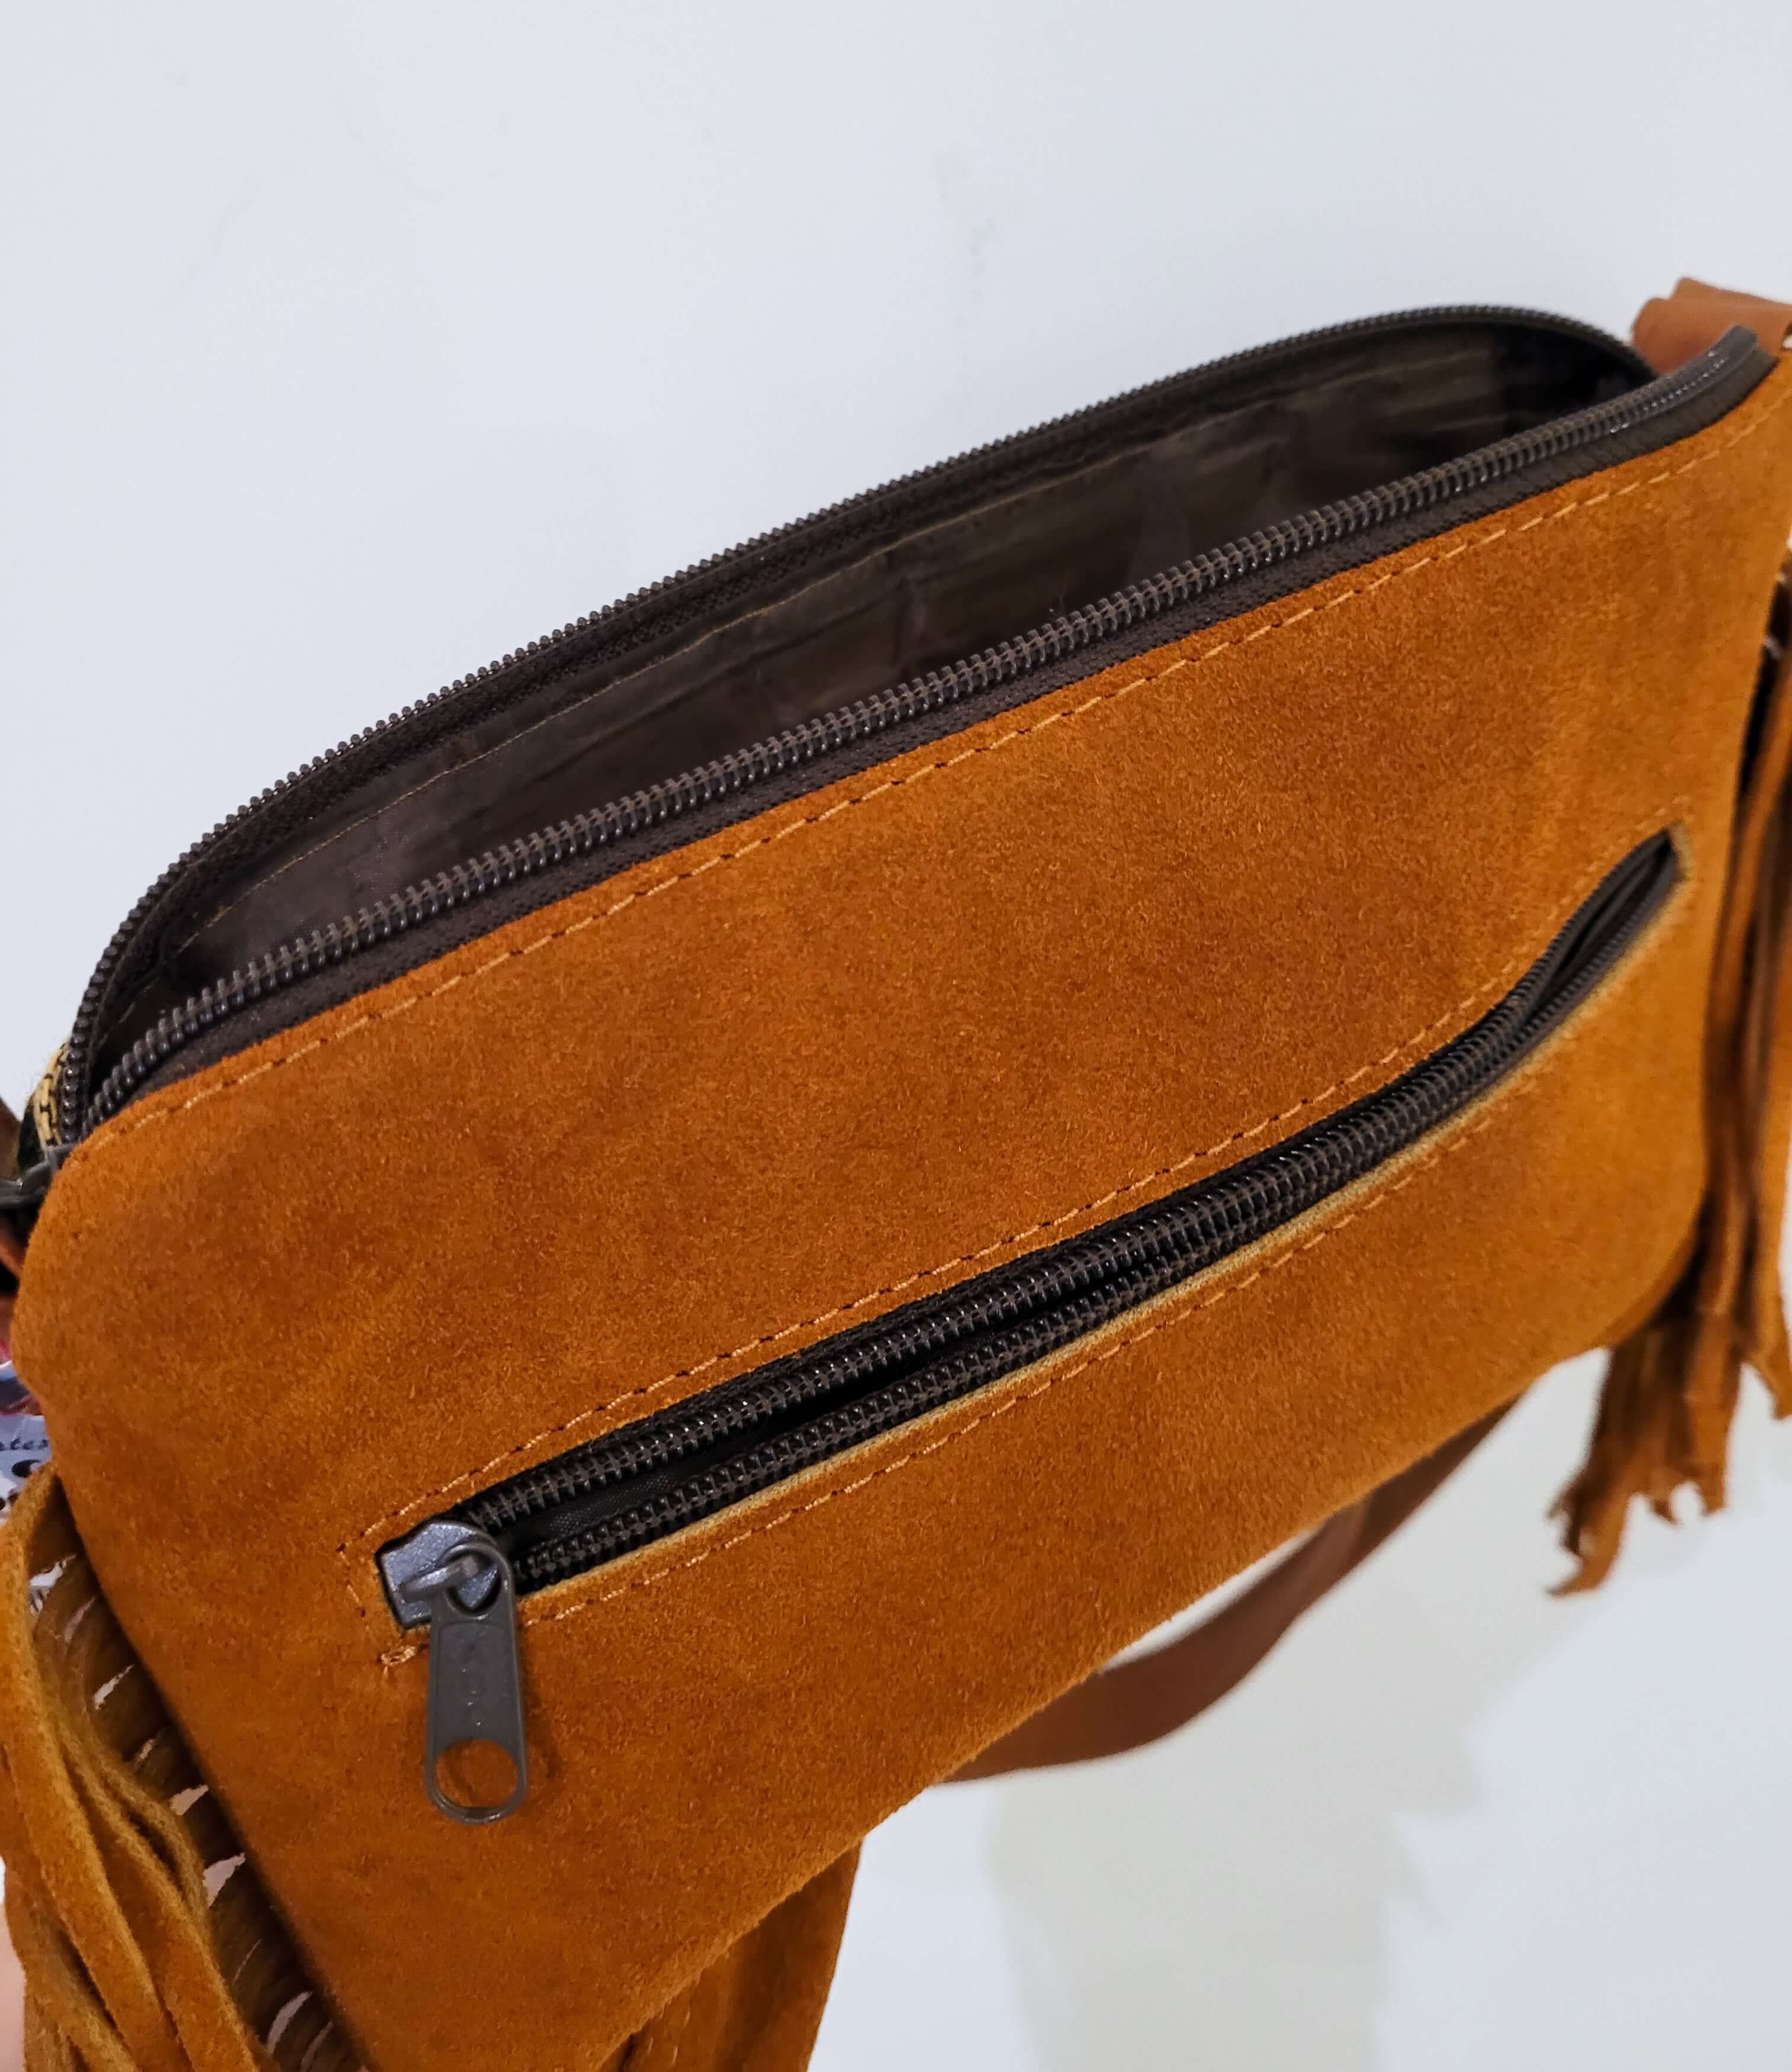 Leather Embroidered Handbag close-up